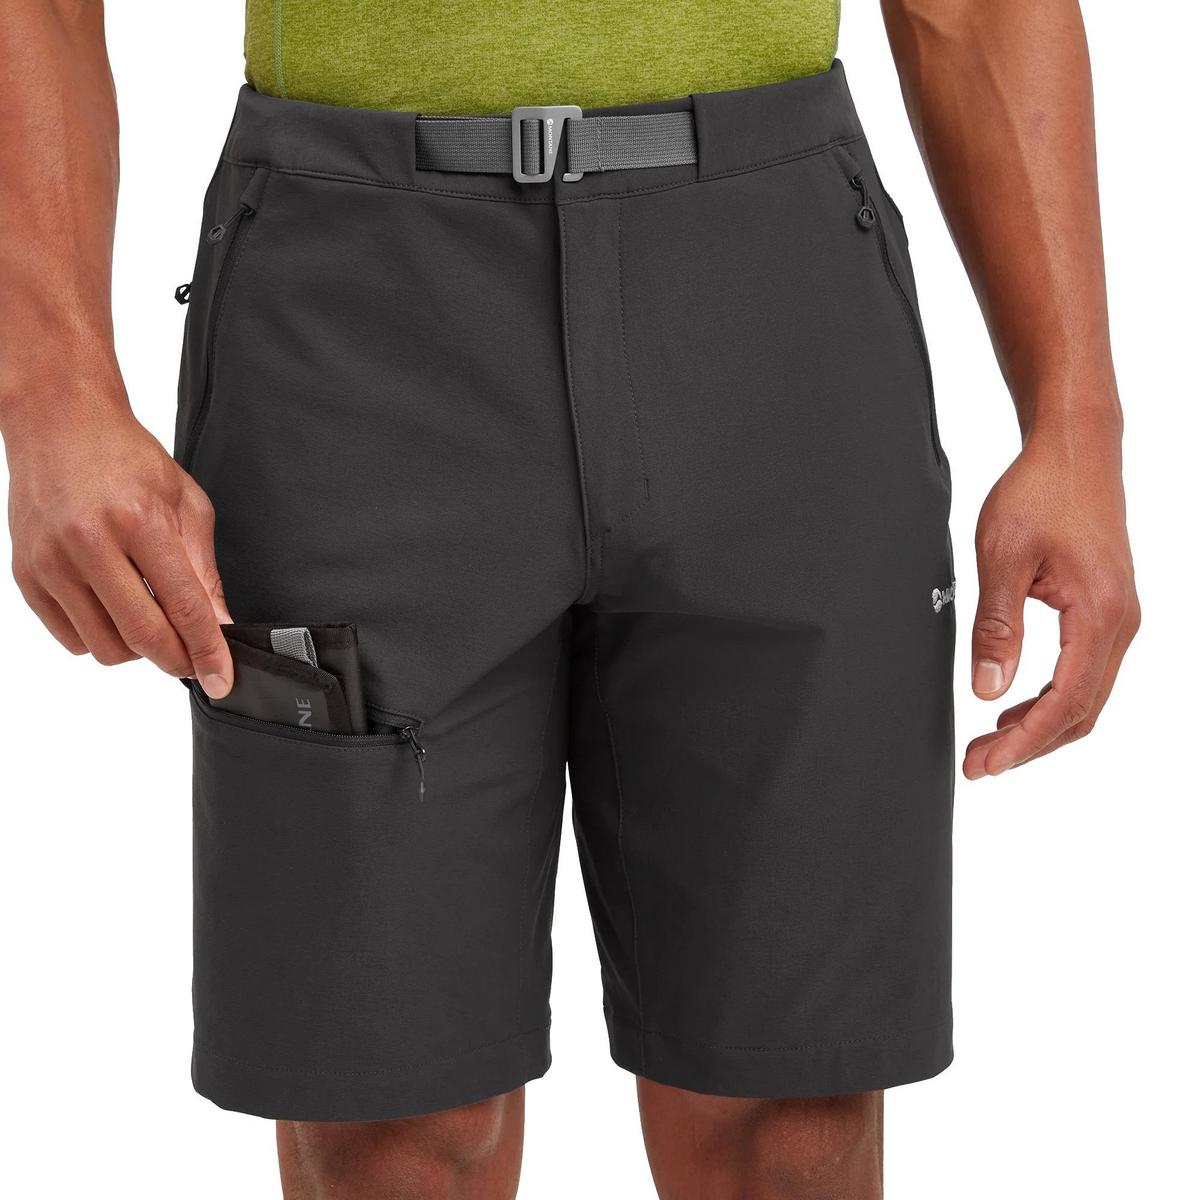 Montane Men's Tenacity Shorts - Grey